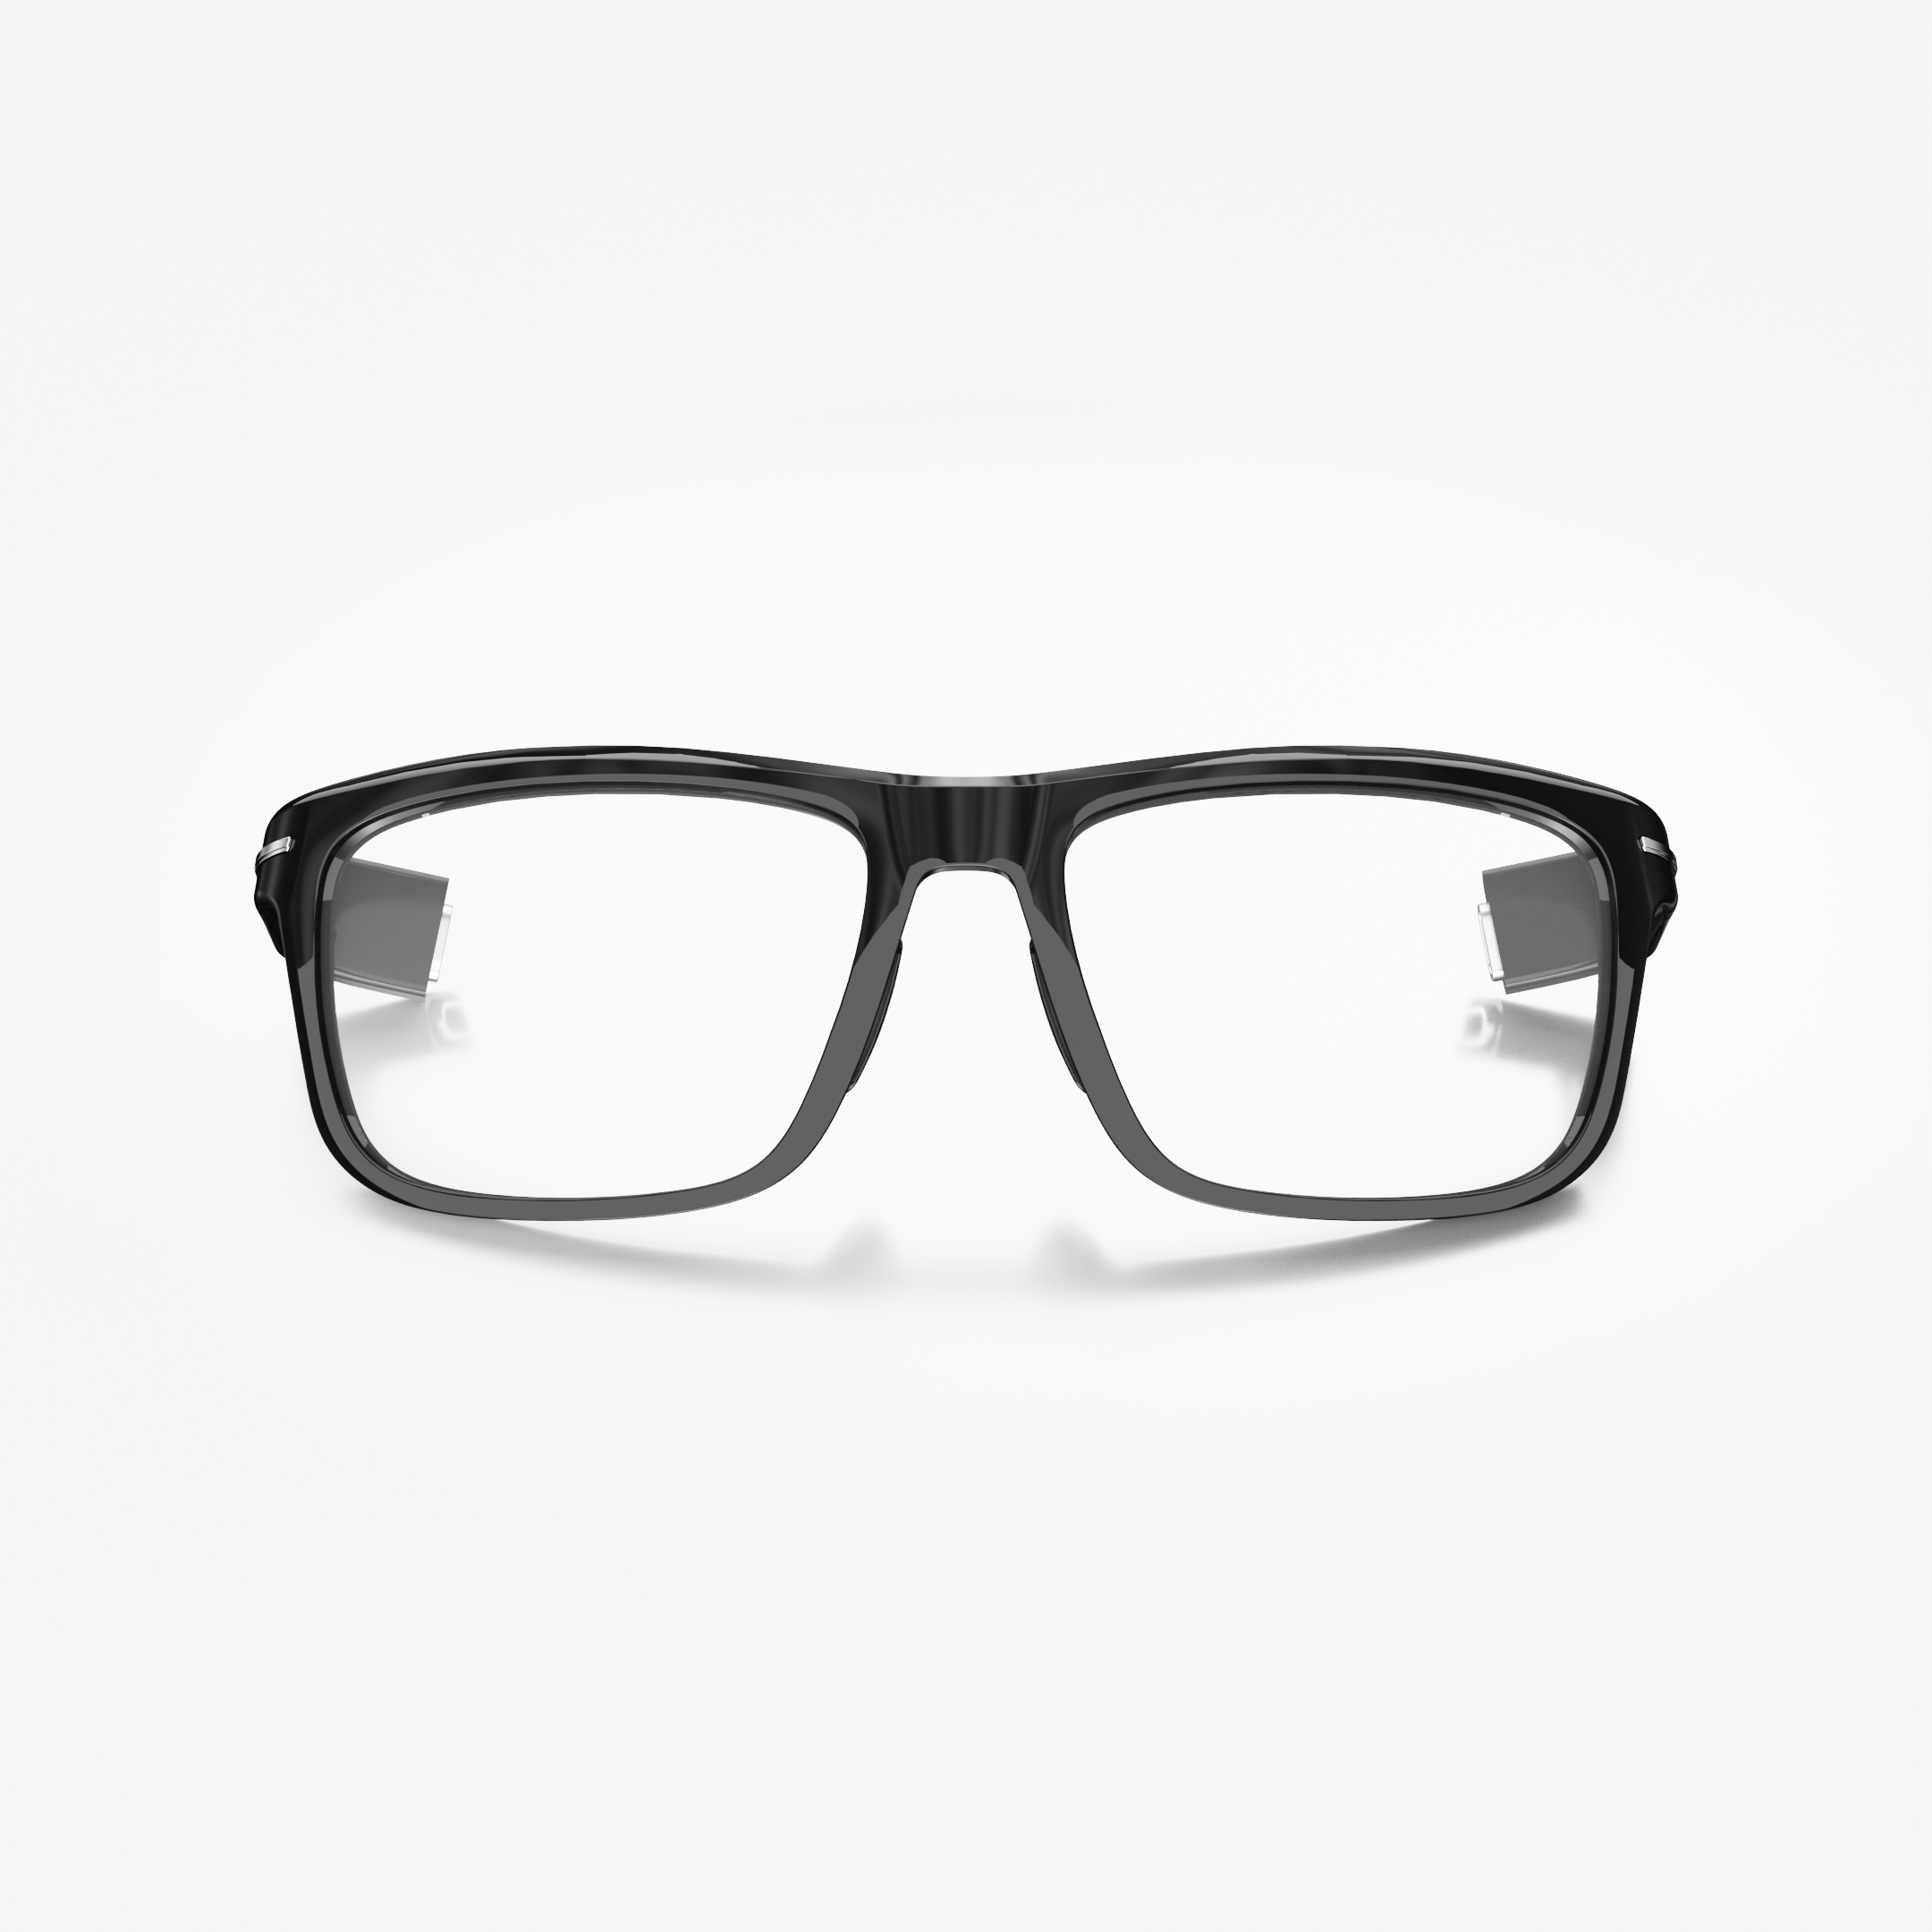 Argon X Smartglasses | solos AirGo™ 3